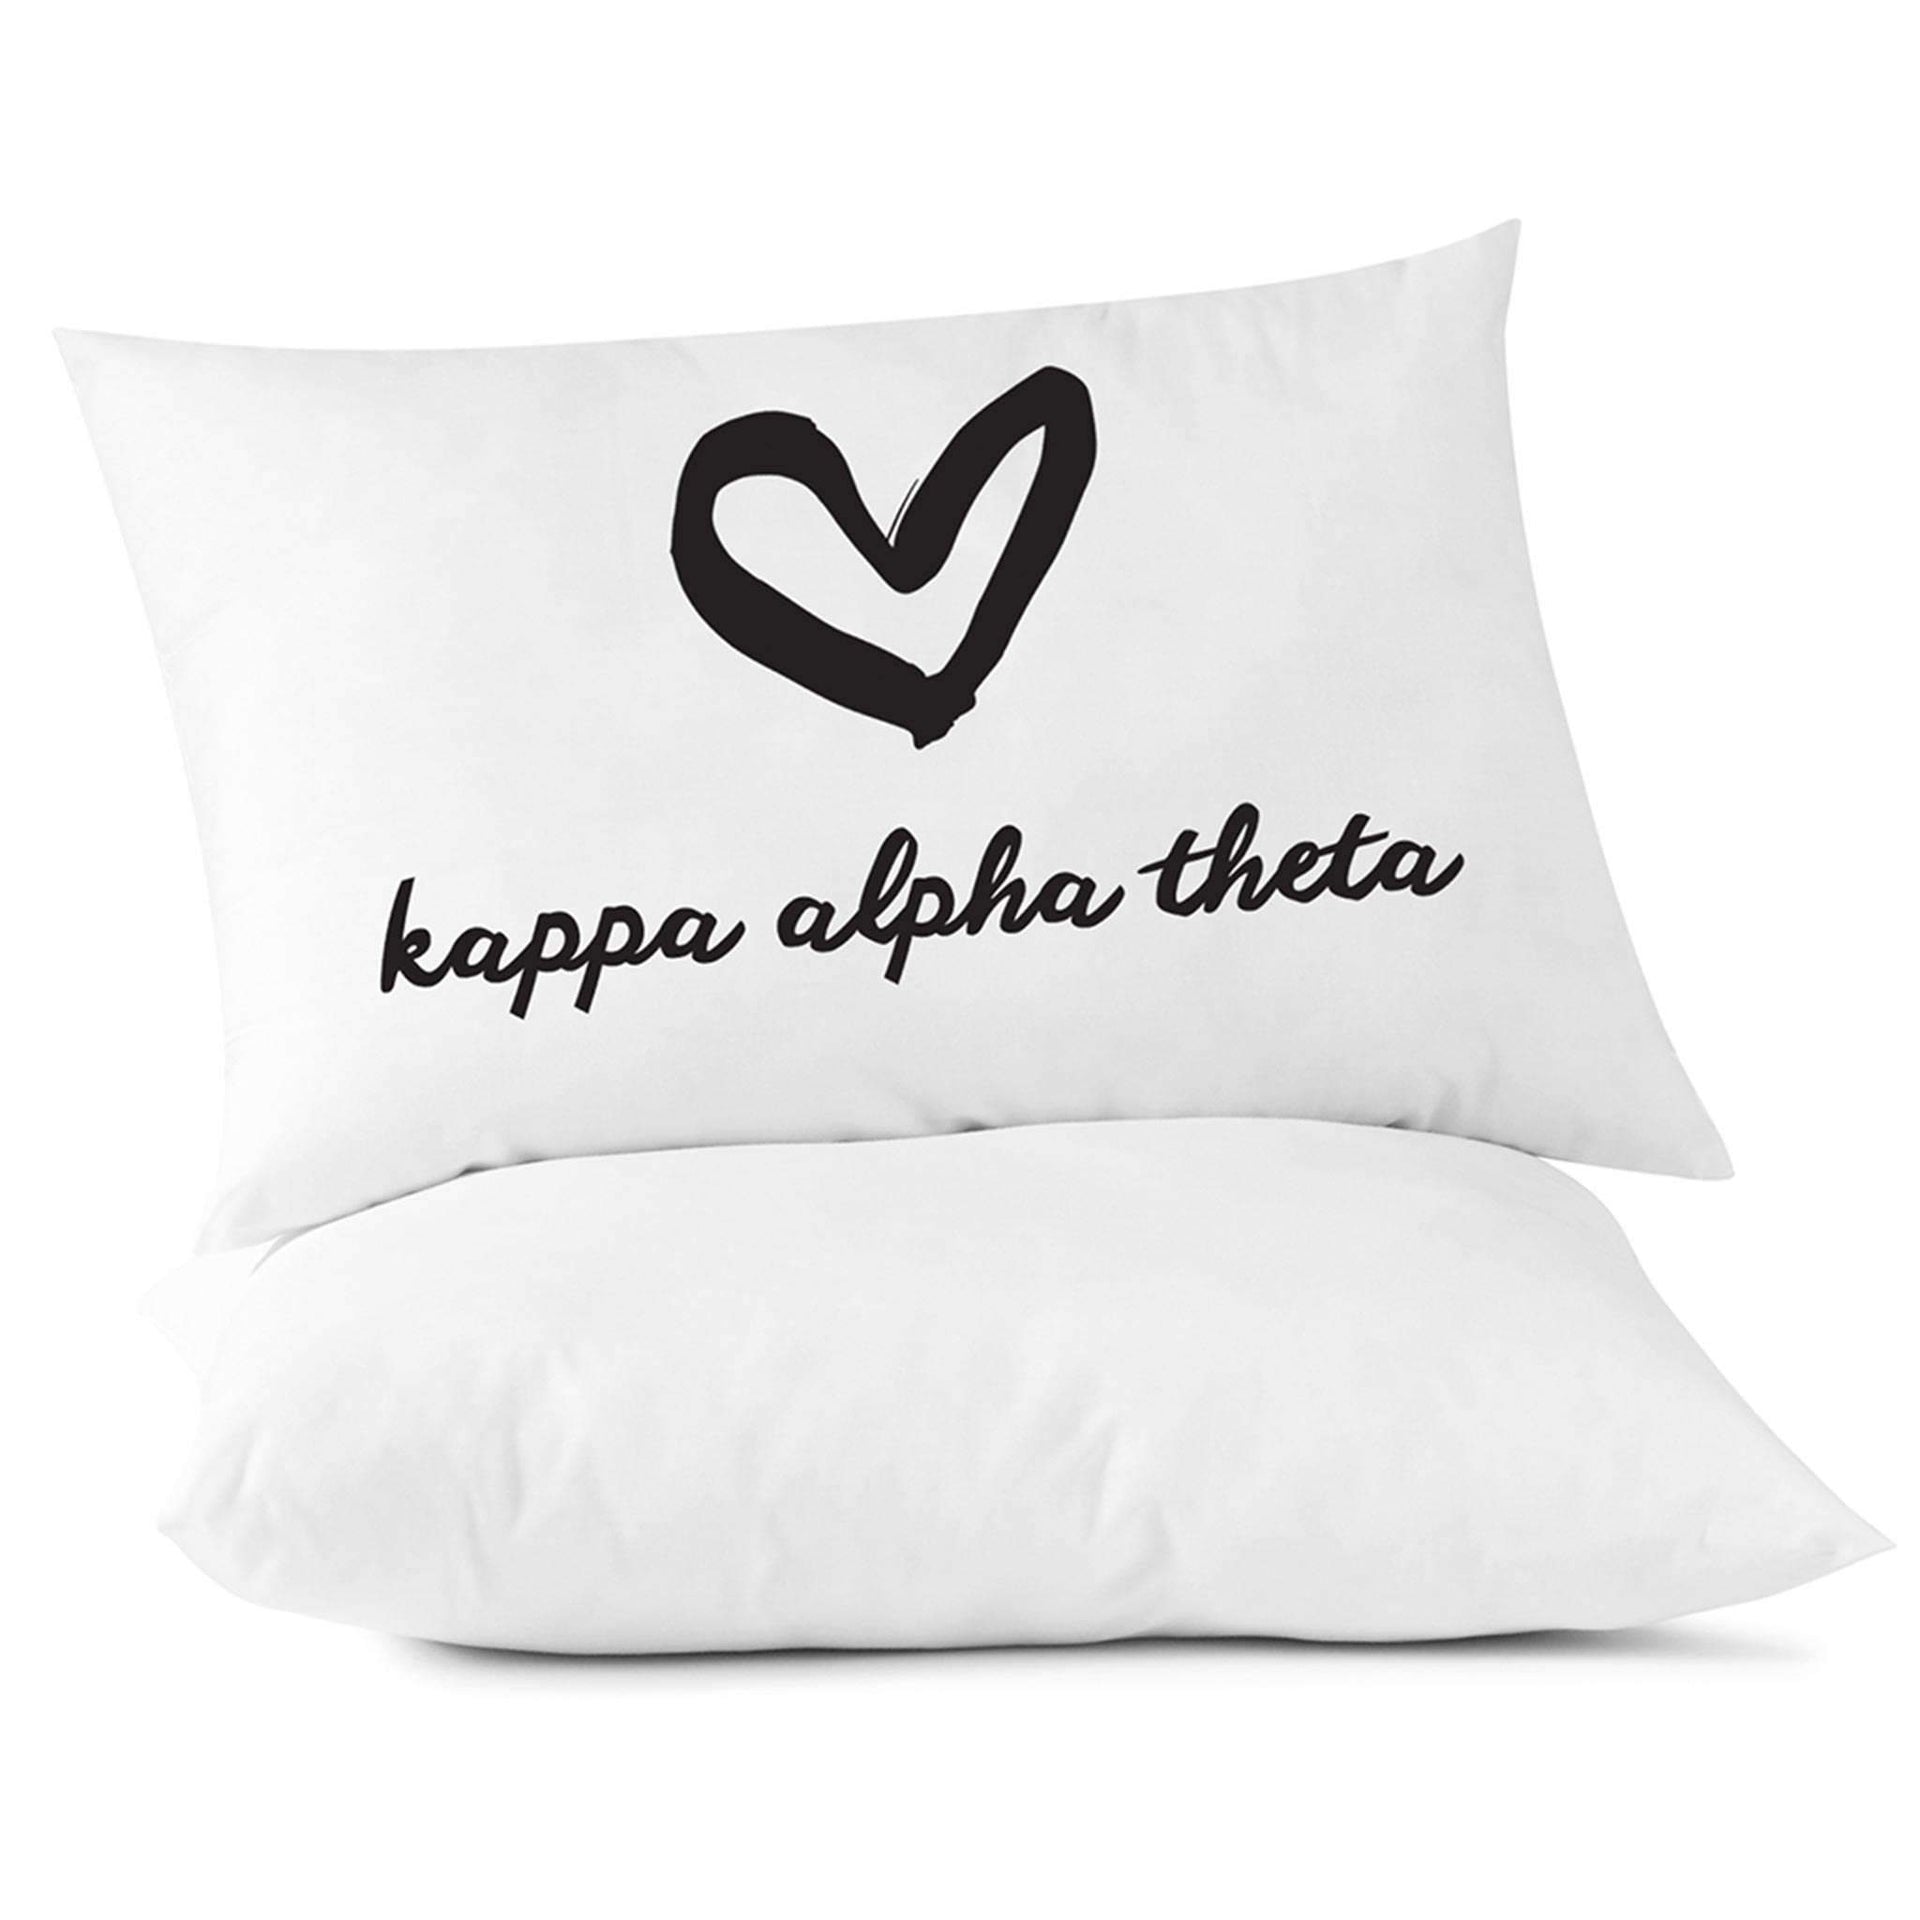 Kappa Alpha Theta sorority name heart design custom printed on pillowcase.